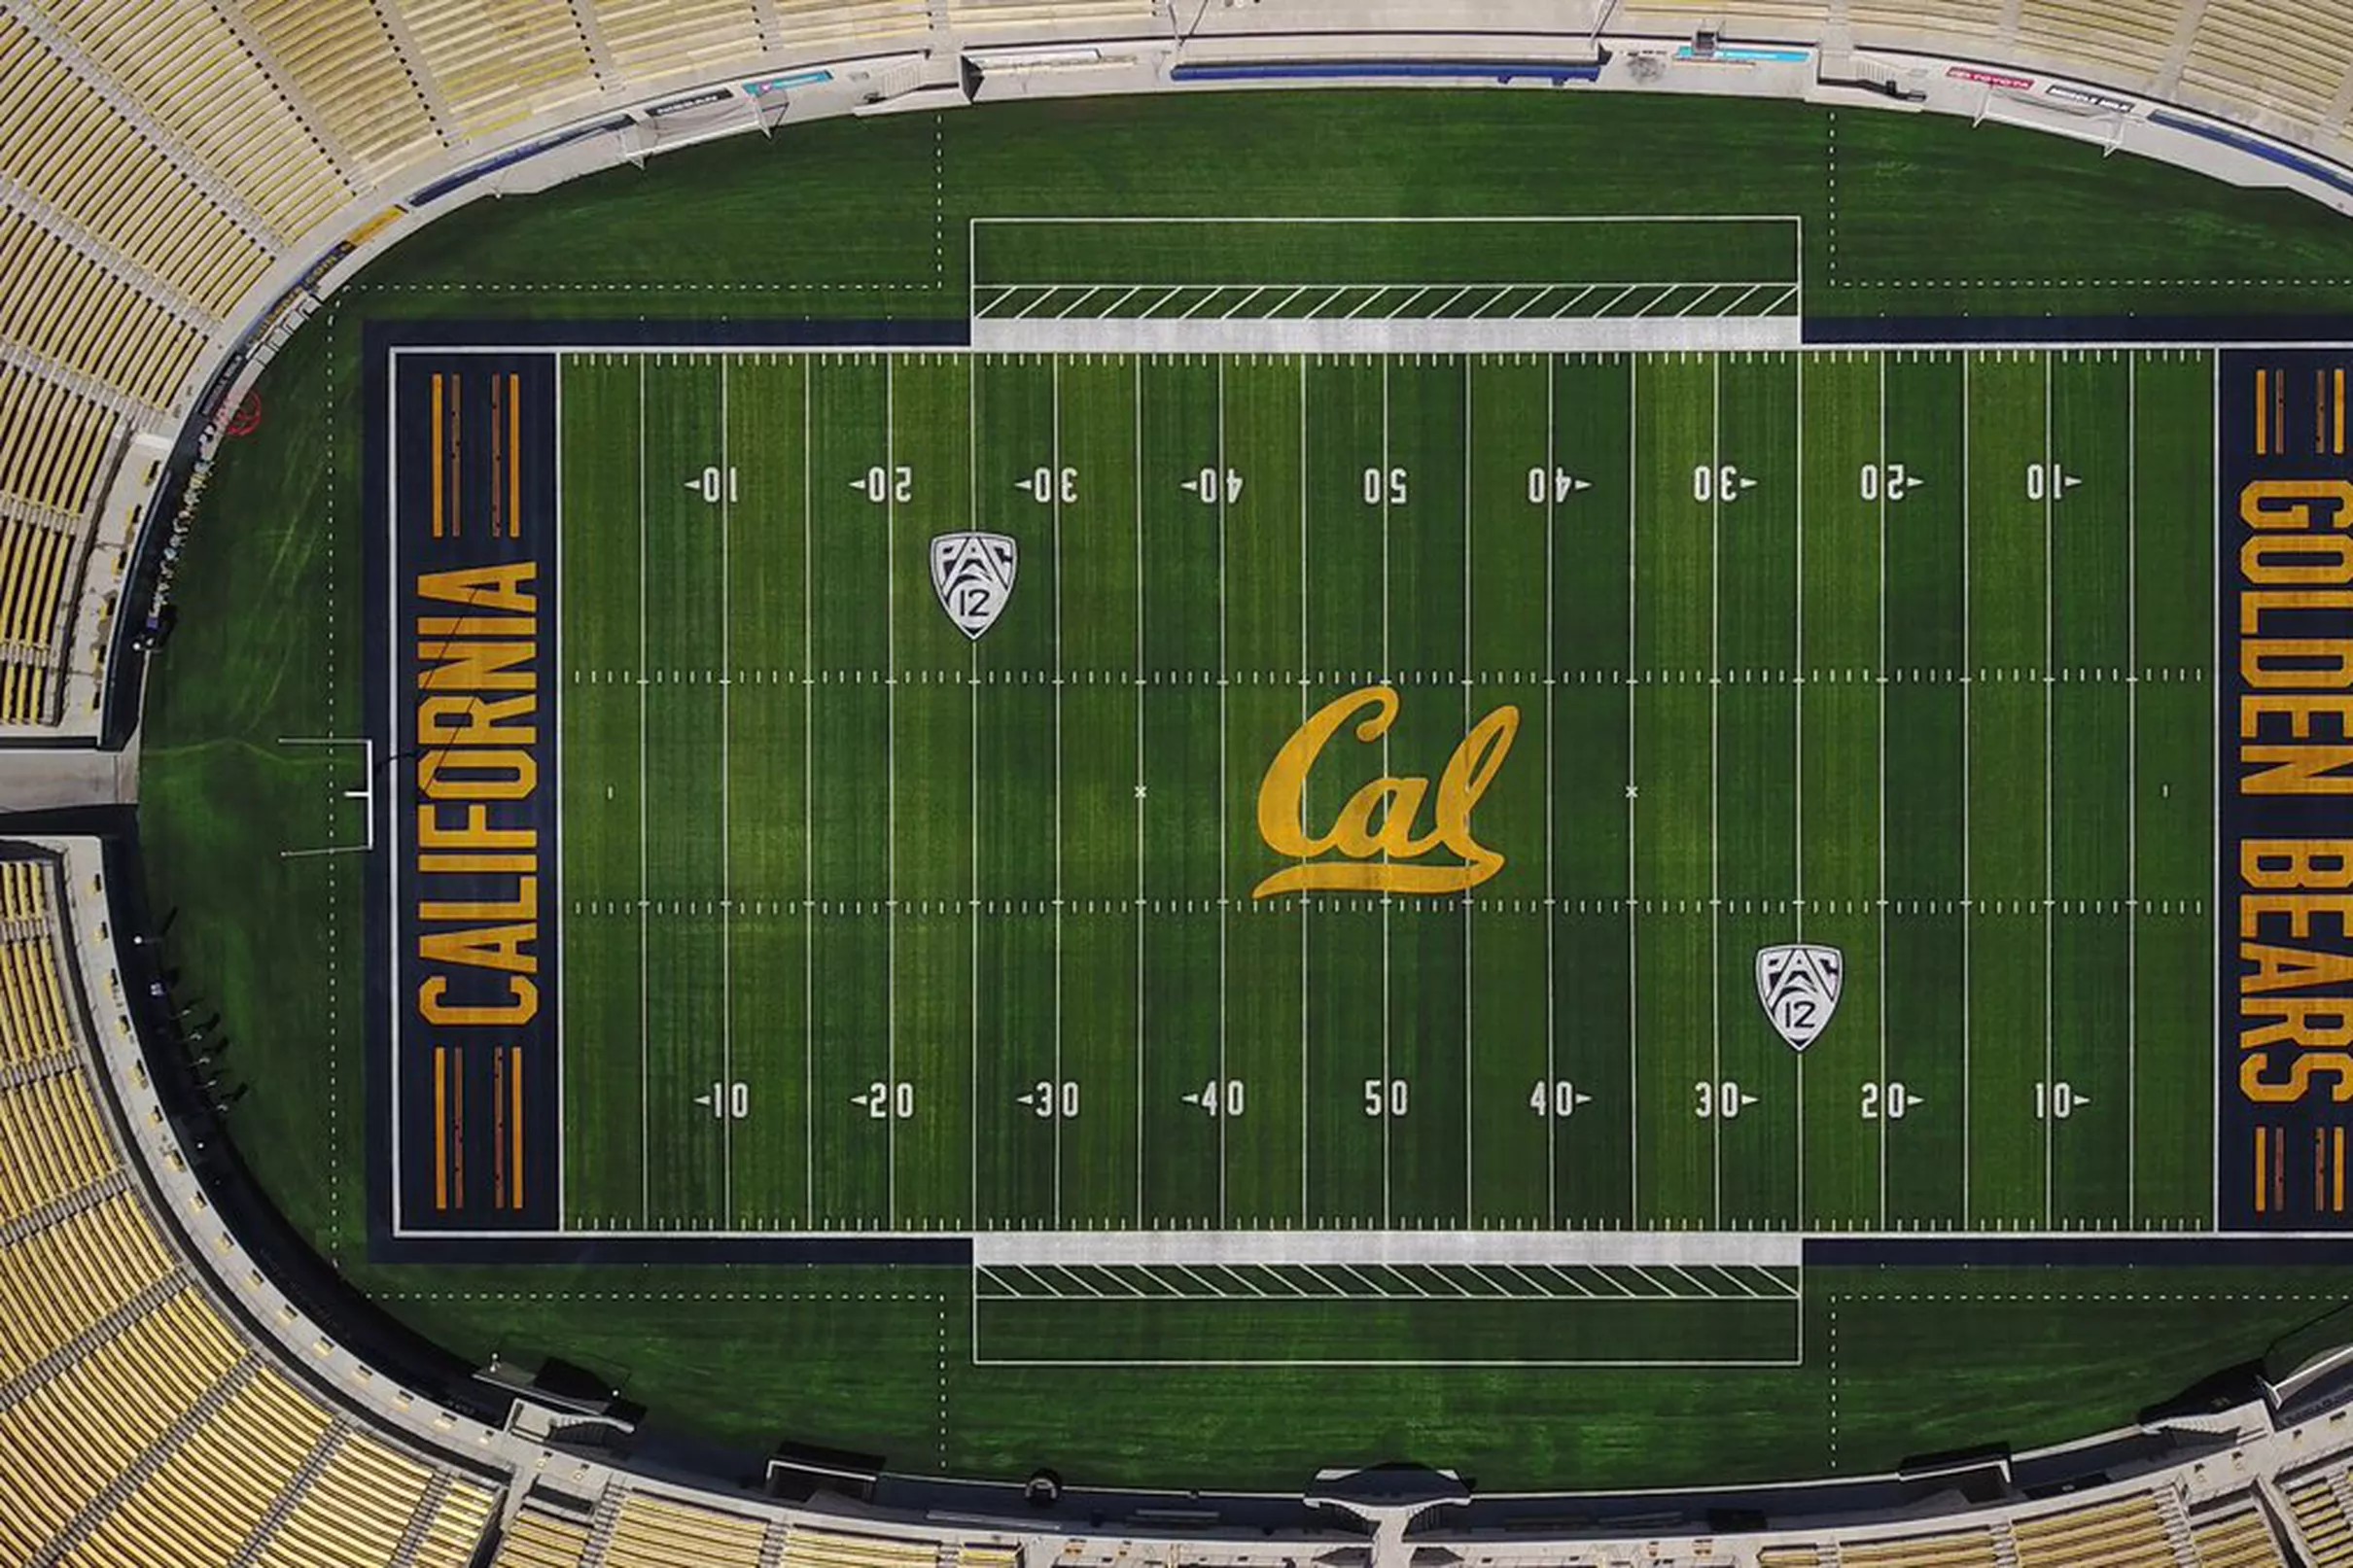 The new Cal football field features the Hayward earthquake fault